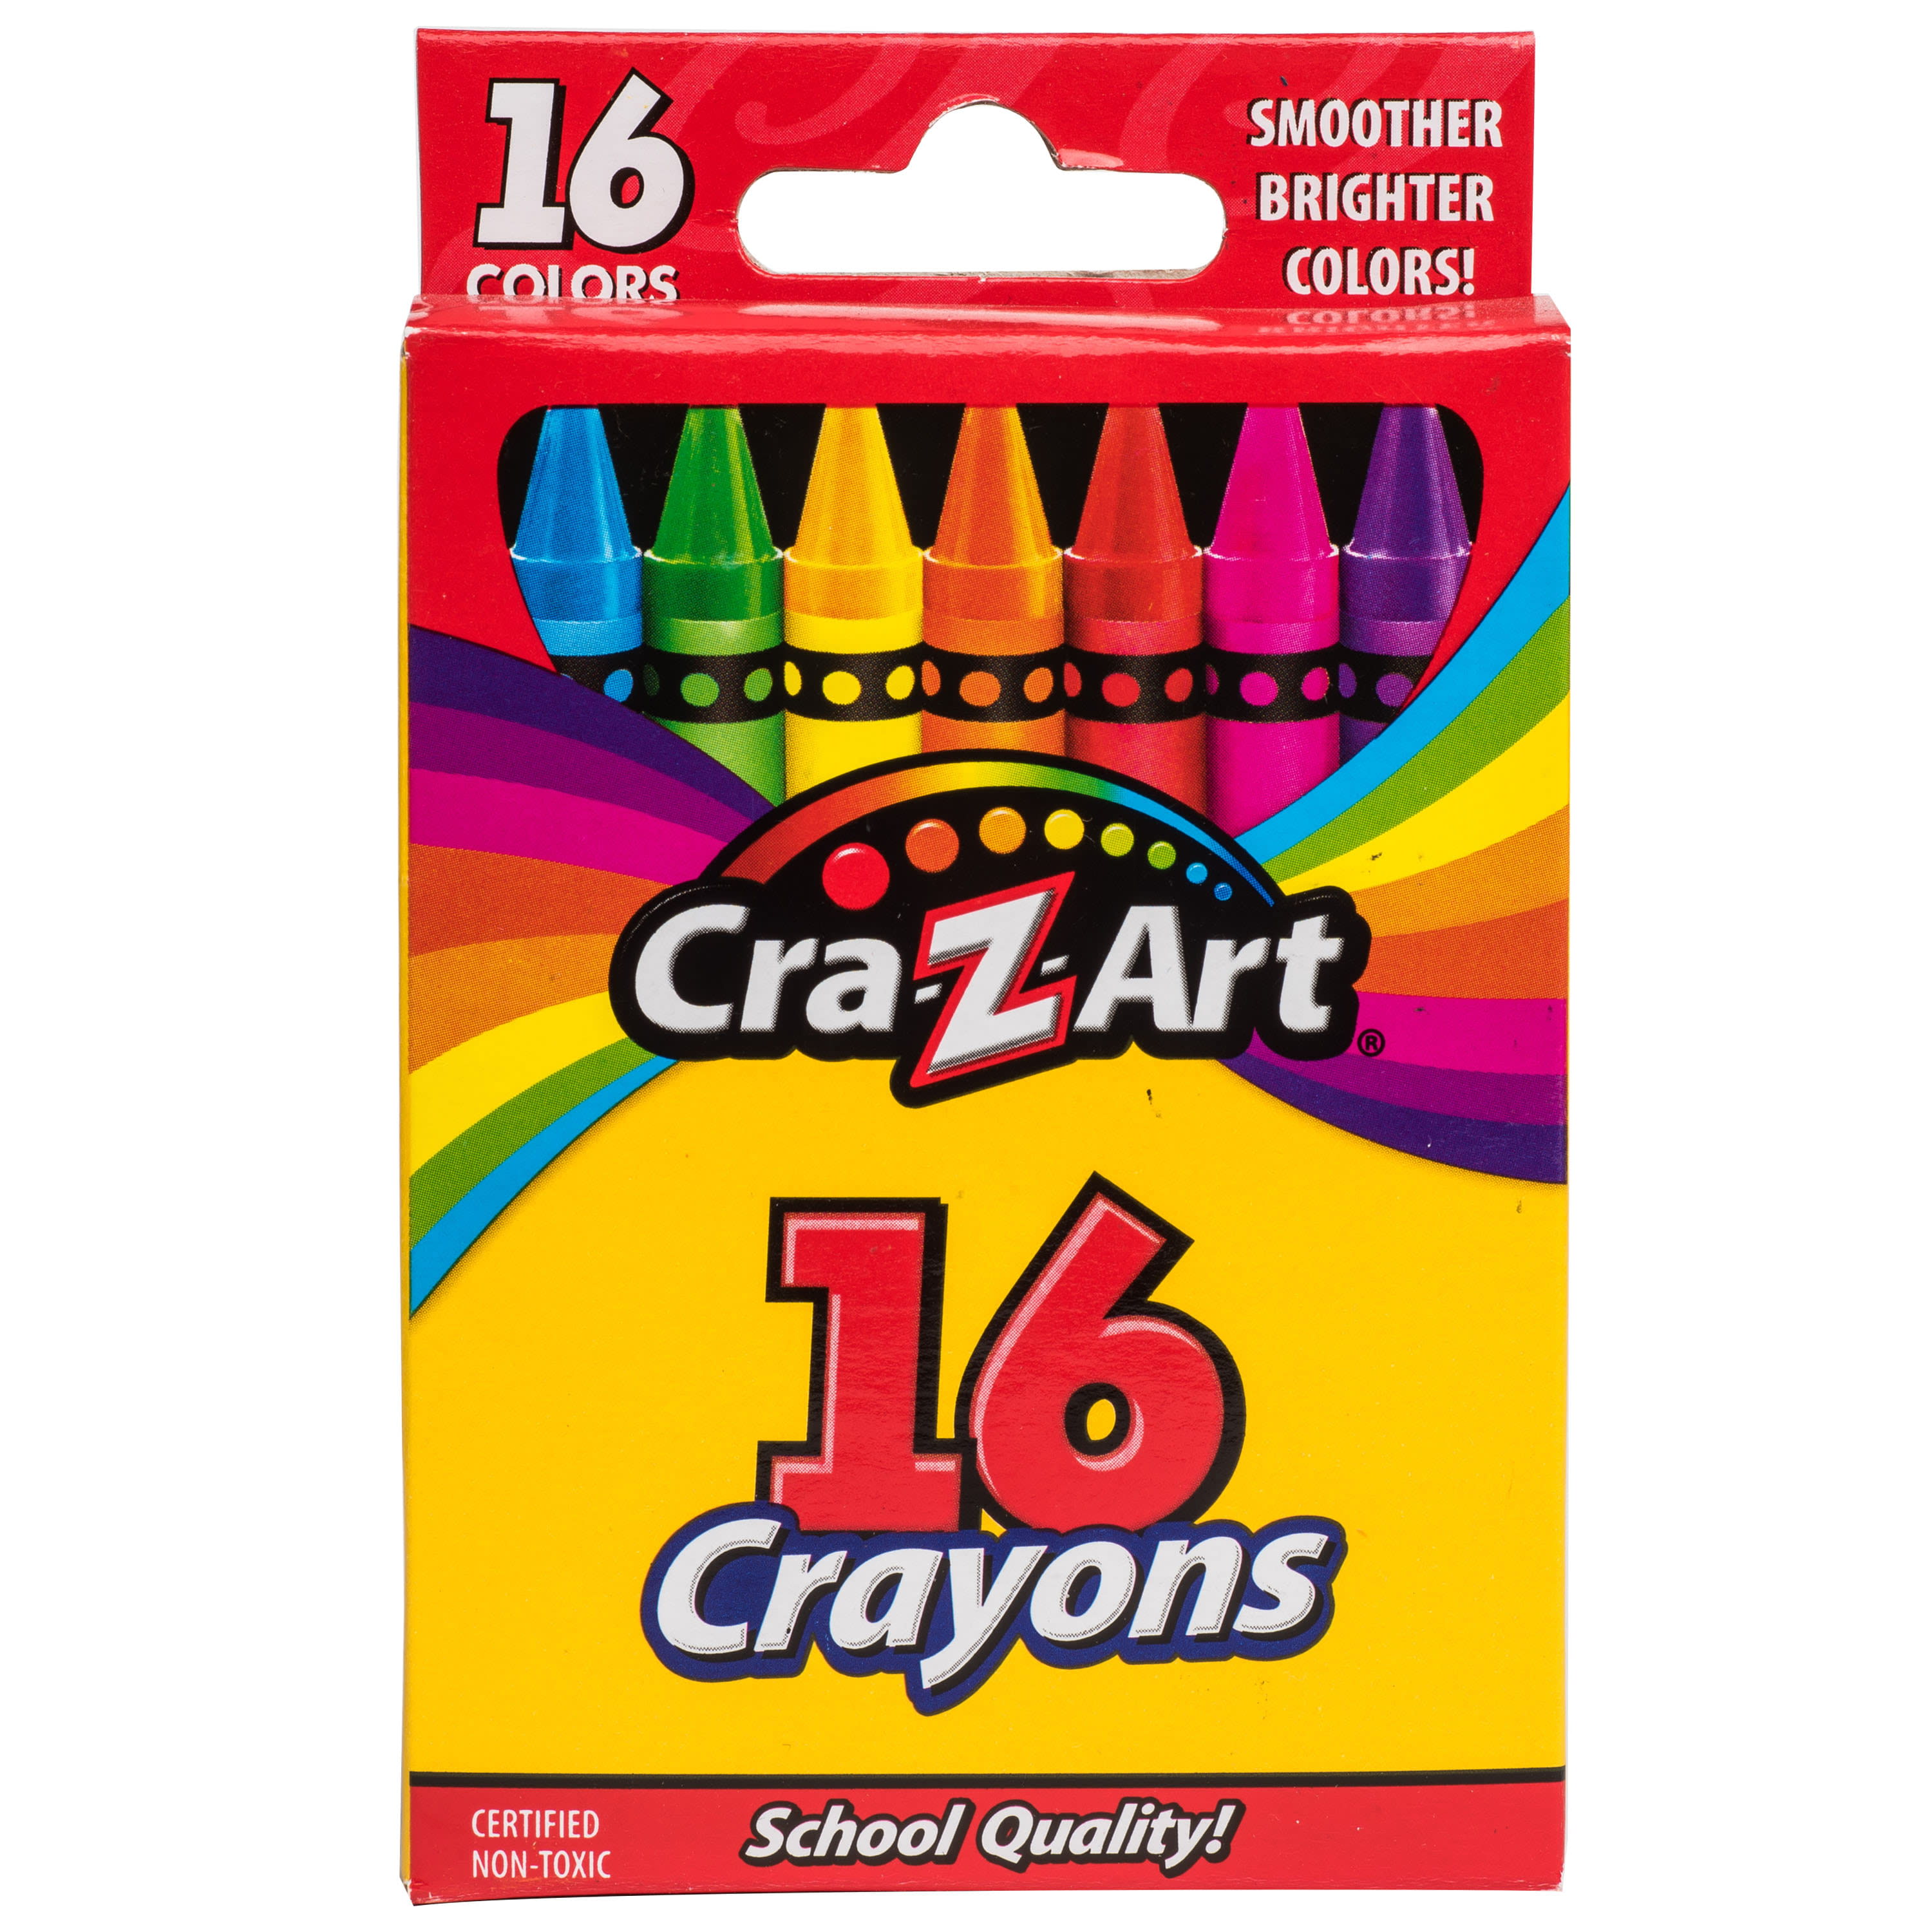 Twistables Mini Crayons, 24 Colors/Pack | Bundle of 5, Size: 4 x 0